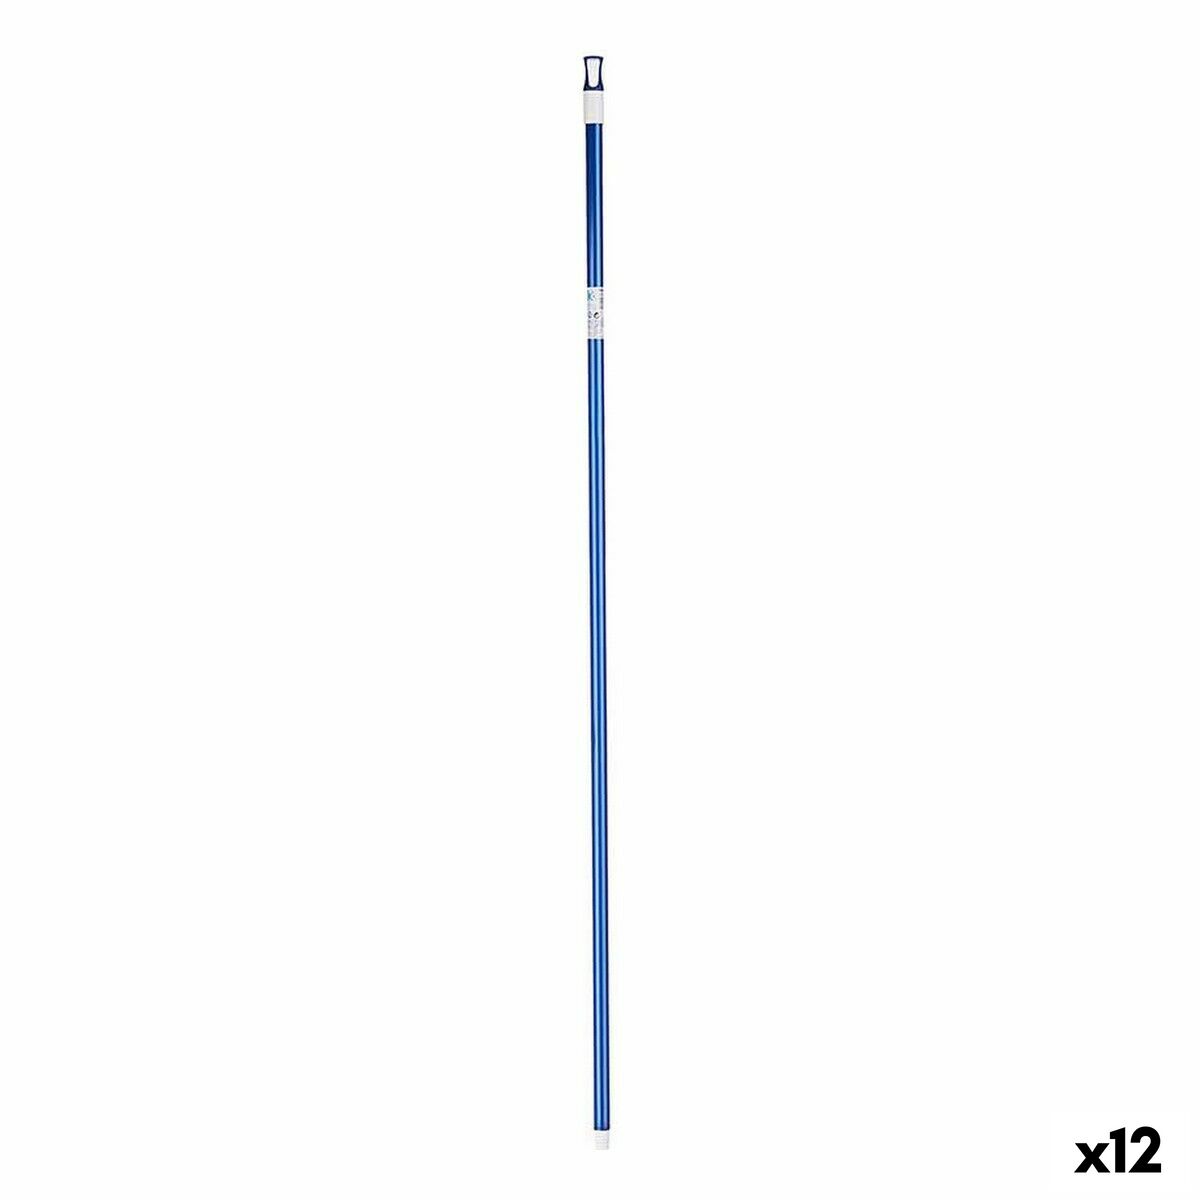 Besenstiel 2,3 x 130 x 2,3 cm Blau Metall (12 Stück)